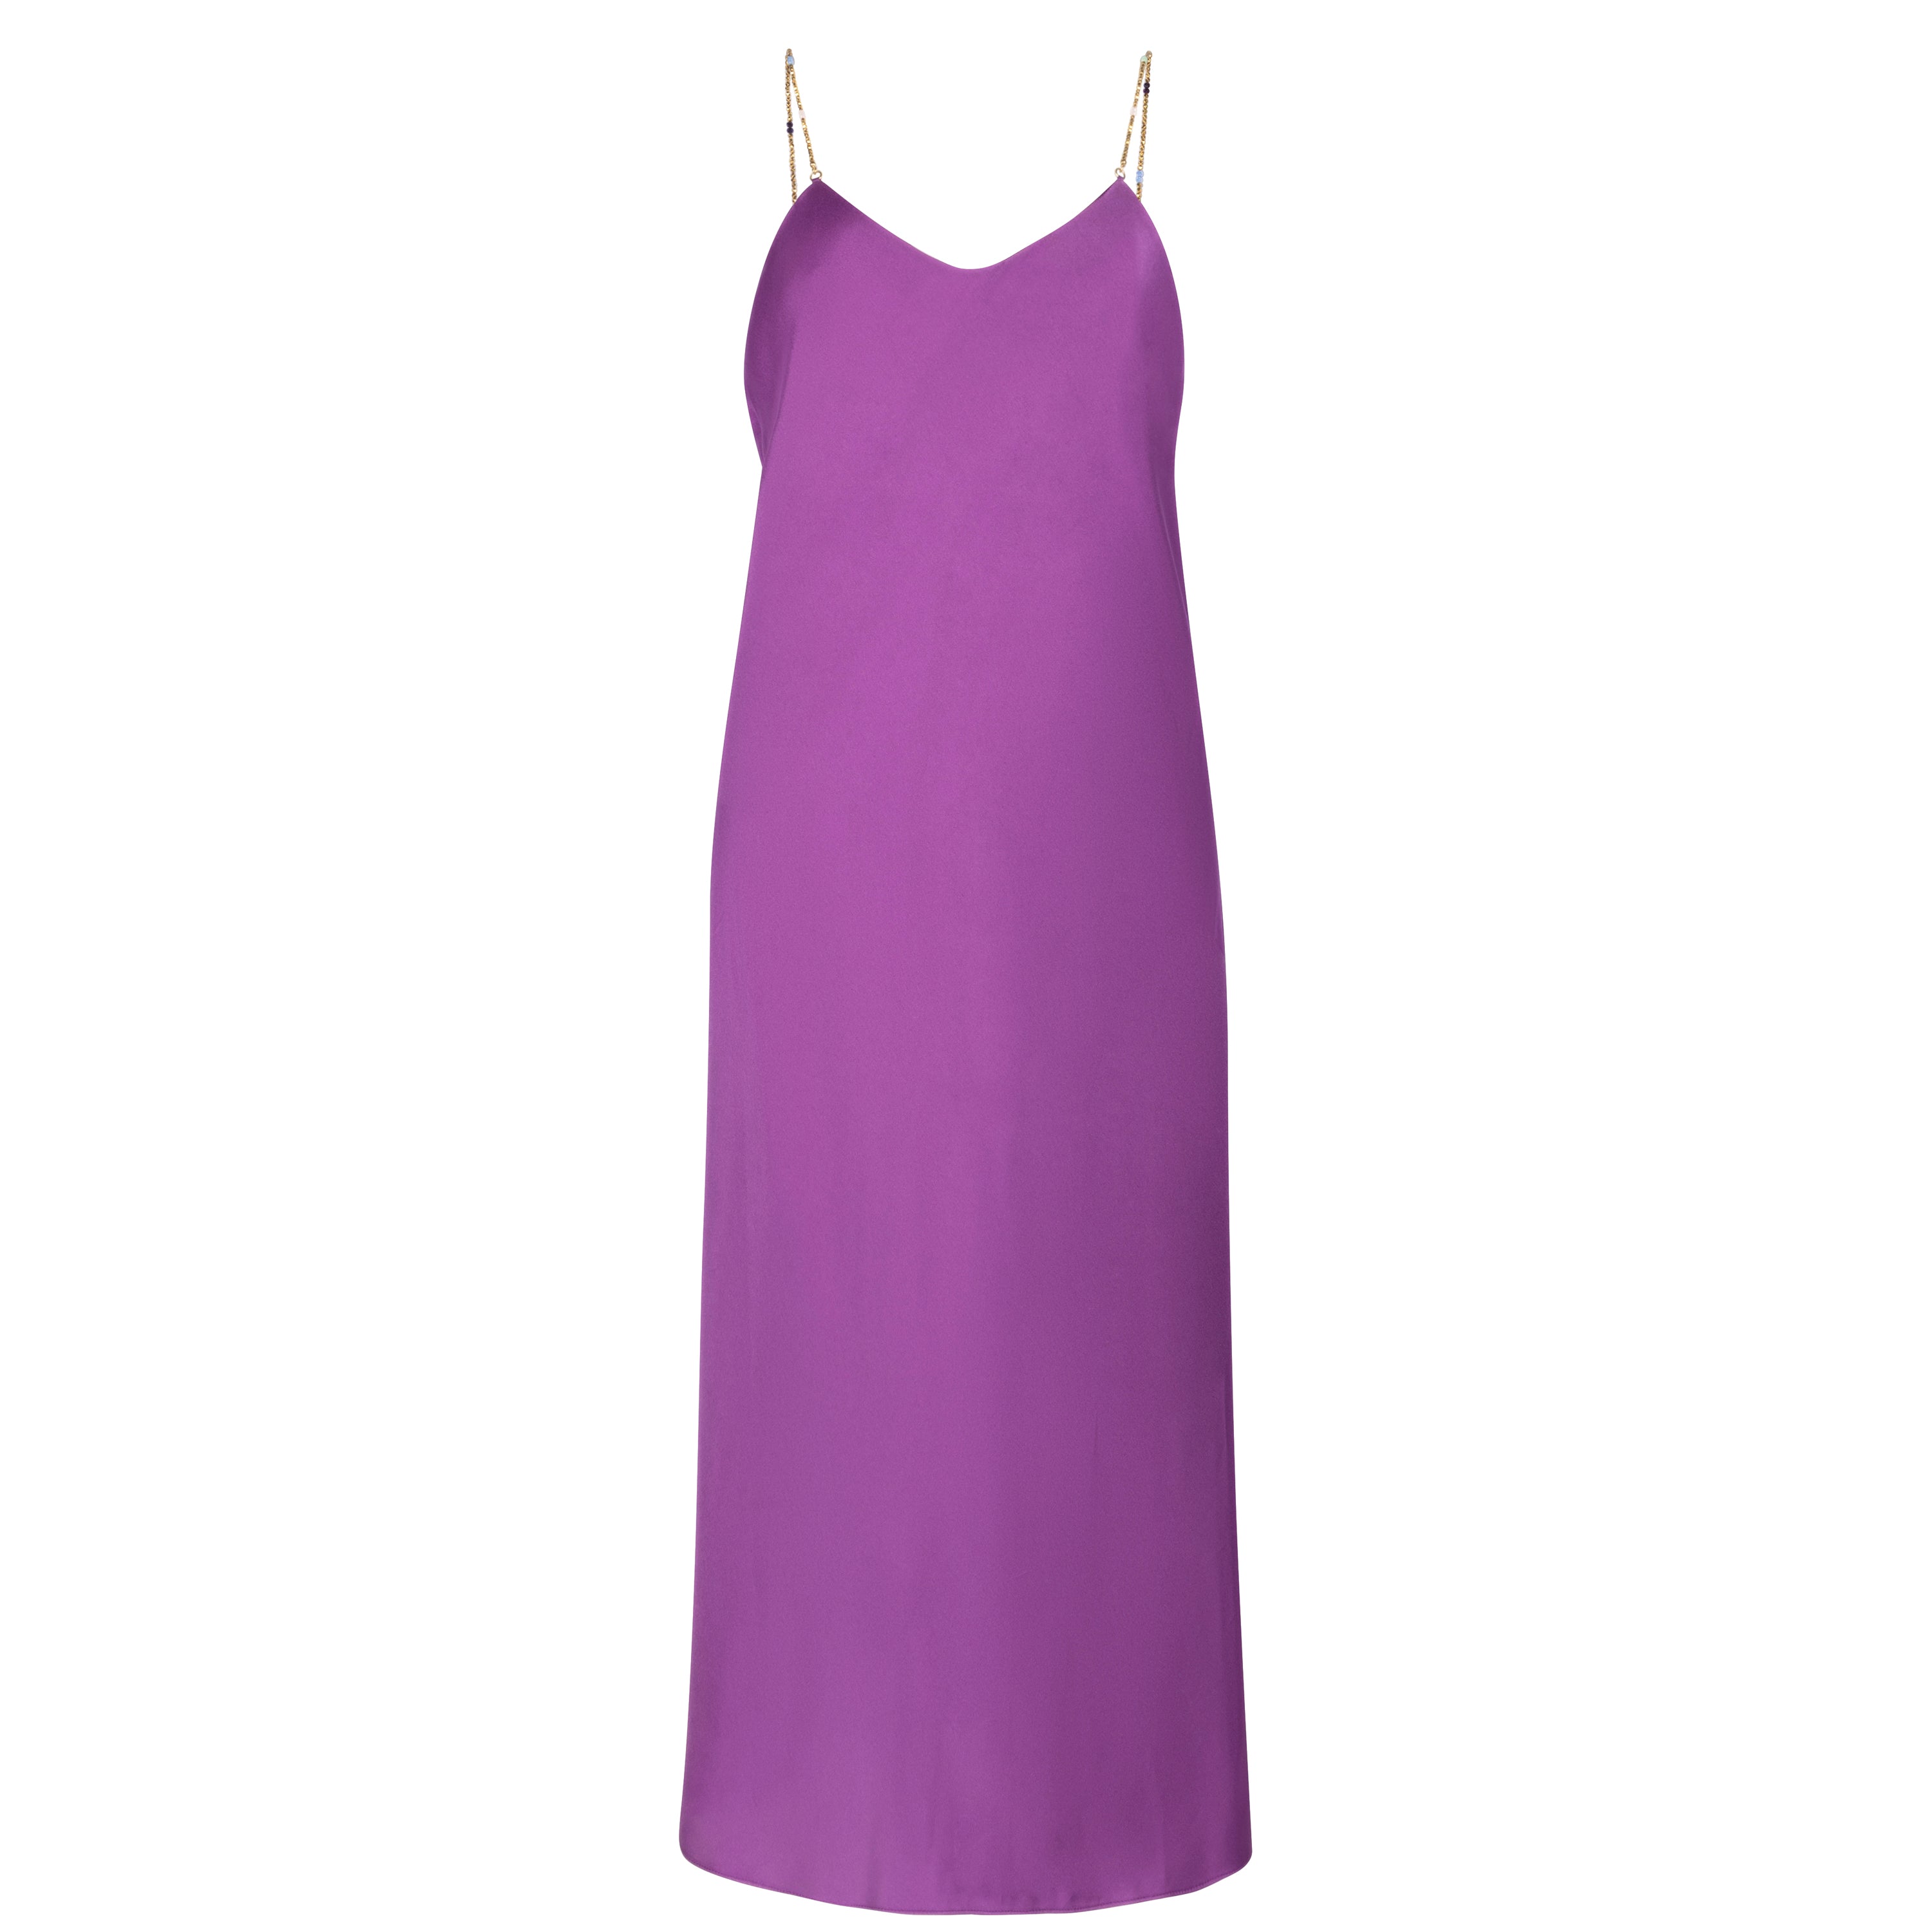 Something Borrowed Bash Dress Purple with pearls -to rent - kledingverhuur Nederland, België